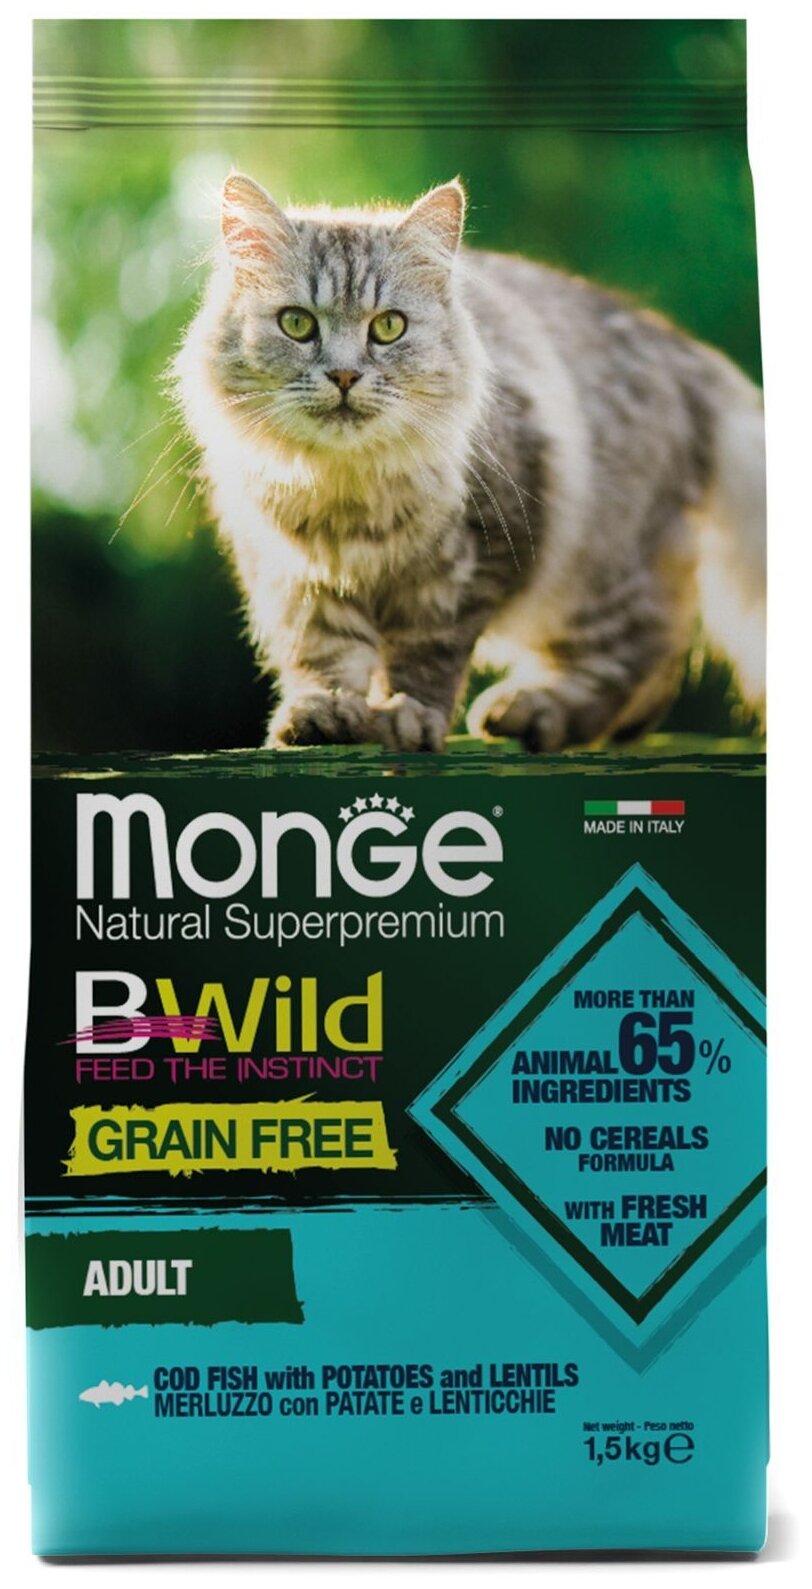 Корм Monge Cat BWild Grain Free беззерновой для взрослых кошек из трески, 1,5кг Unknown - фото №1